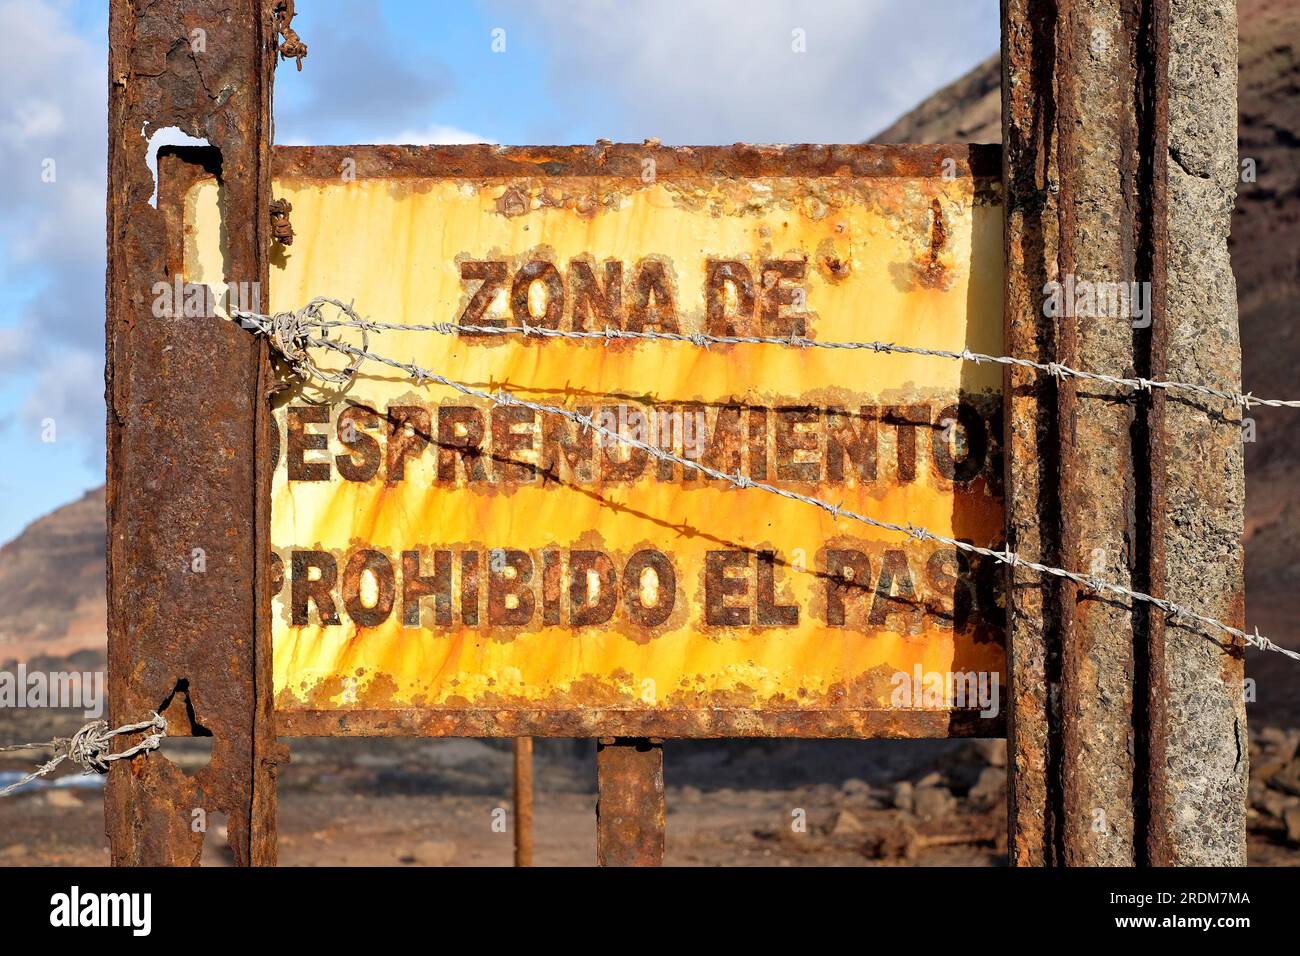 A rusty warning sign in Spanish: zona de desprendimiento prohibido el paso (English: entry prohibited, falling stones zone). Stock Photo